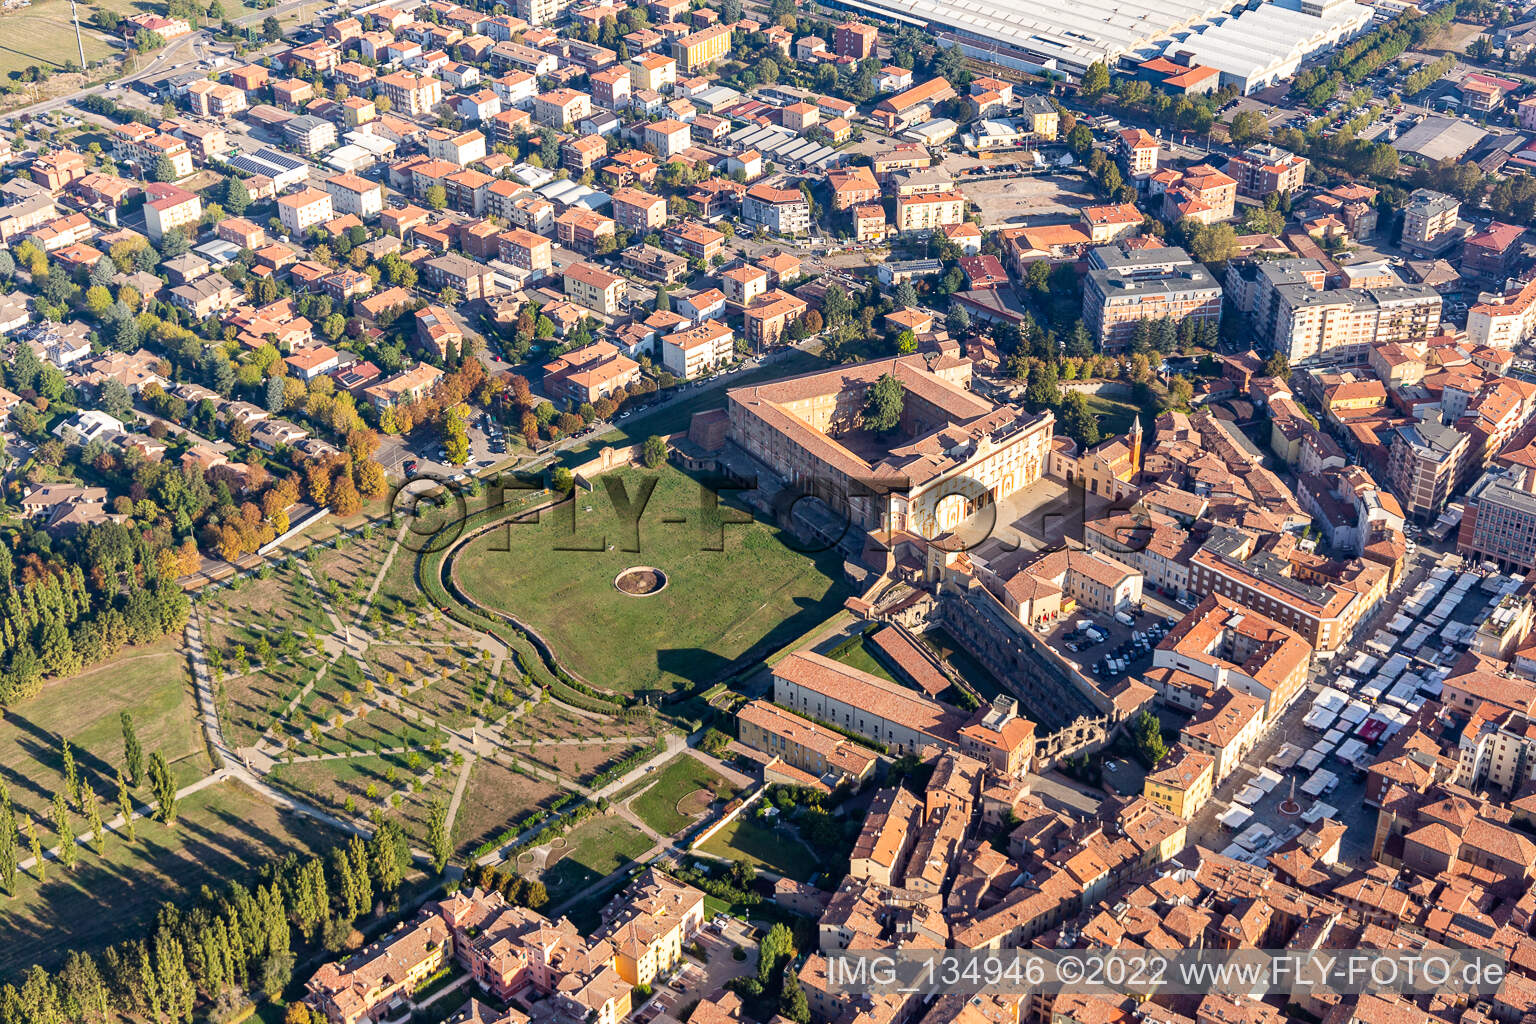 Schrägluftbild von Parco Ducale, Giardini Ducali und Palazzo Ducale in Sassuolo im Bundesland Modena, Italien